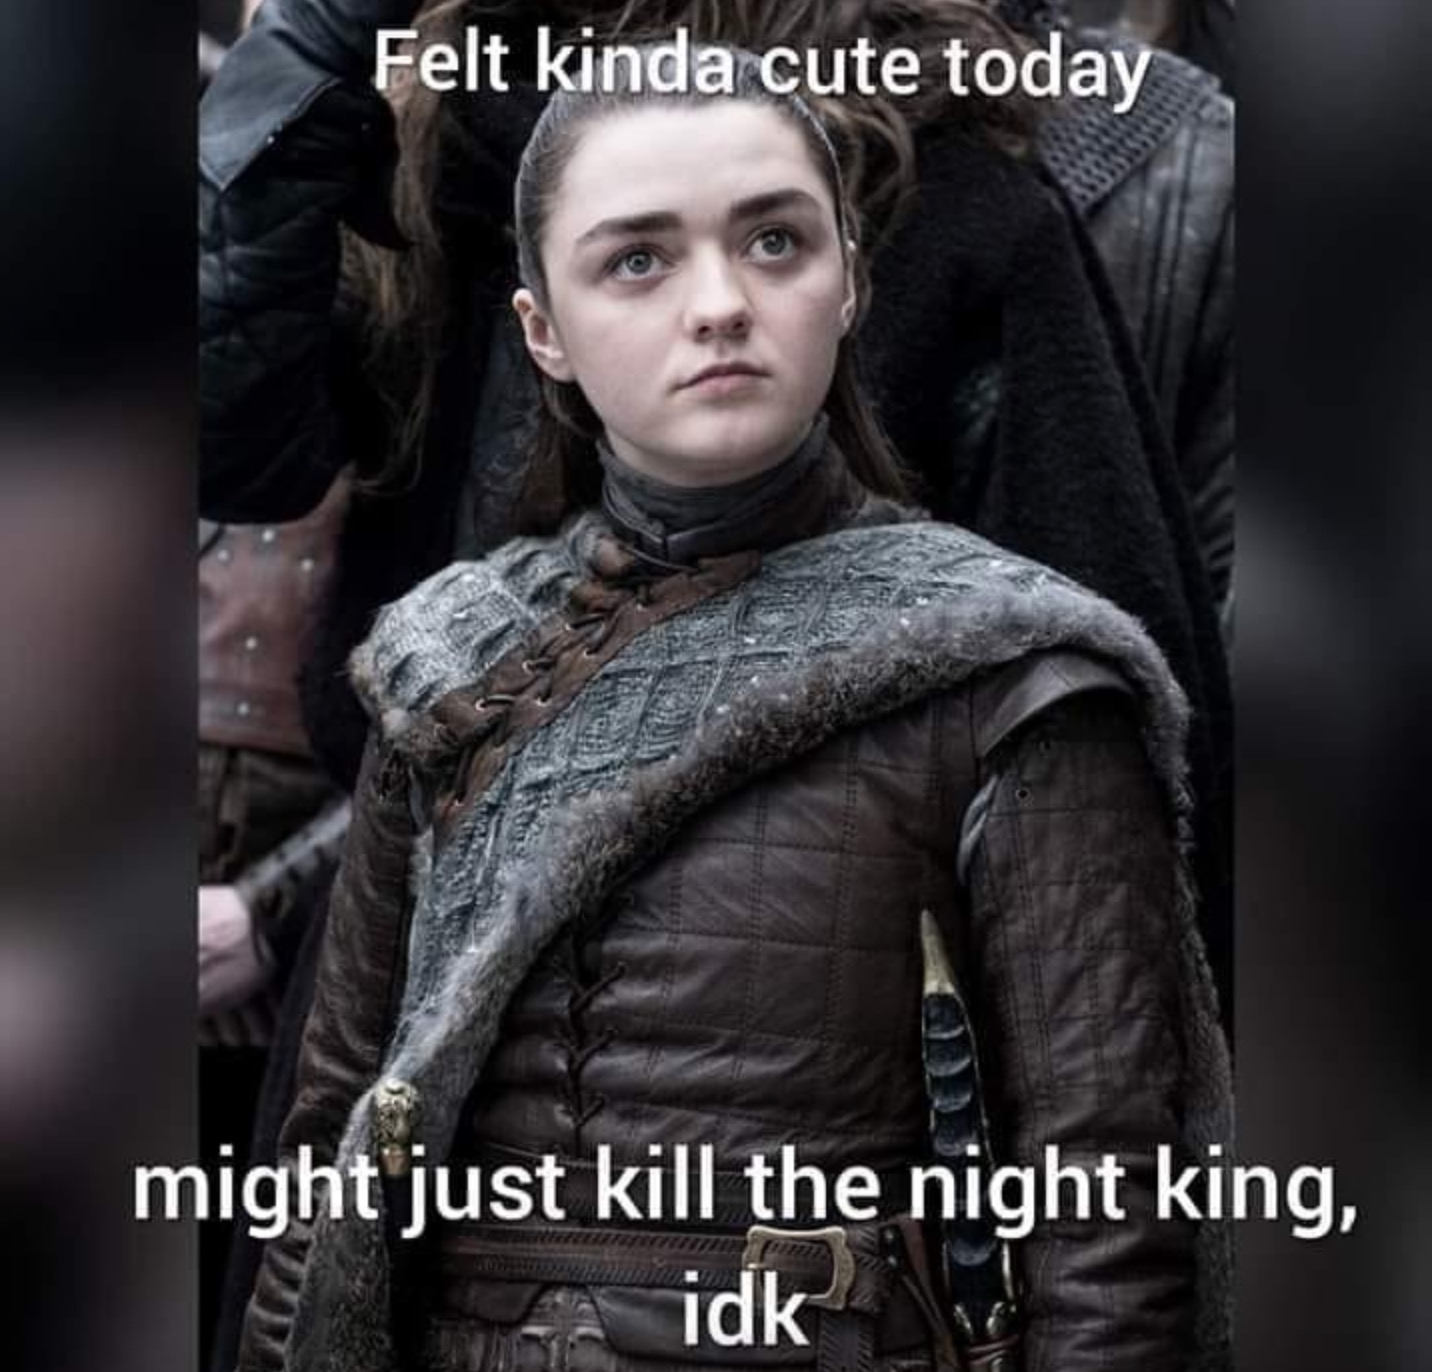 Game of Thrones memes - Battle for Winterfell - got season 8 - Felt kinda cute today might just kill the night king, idk